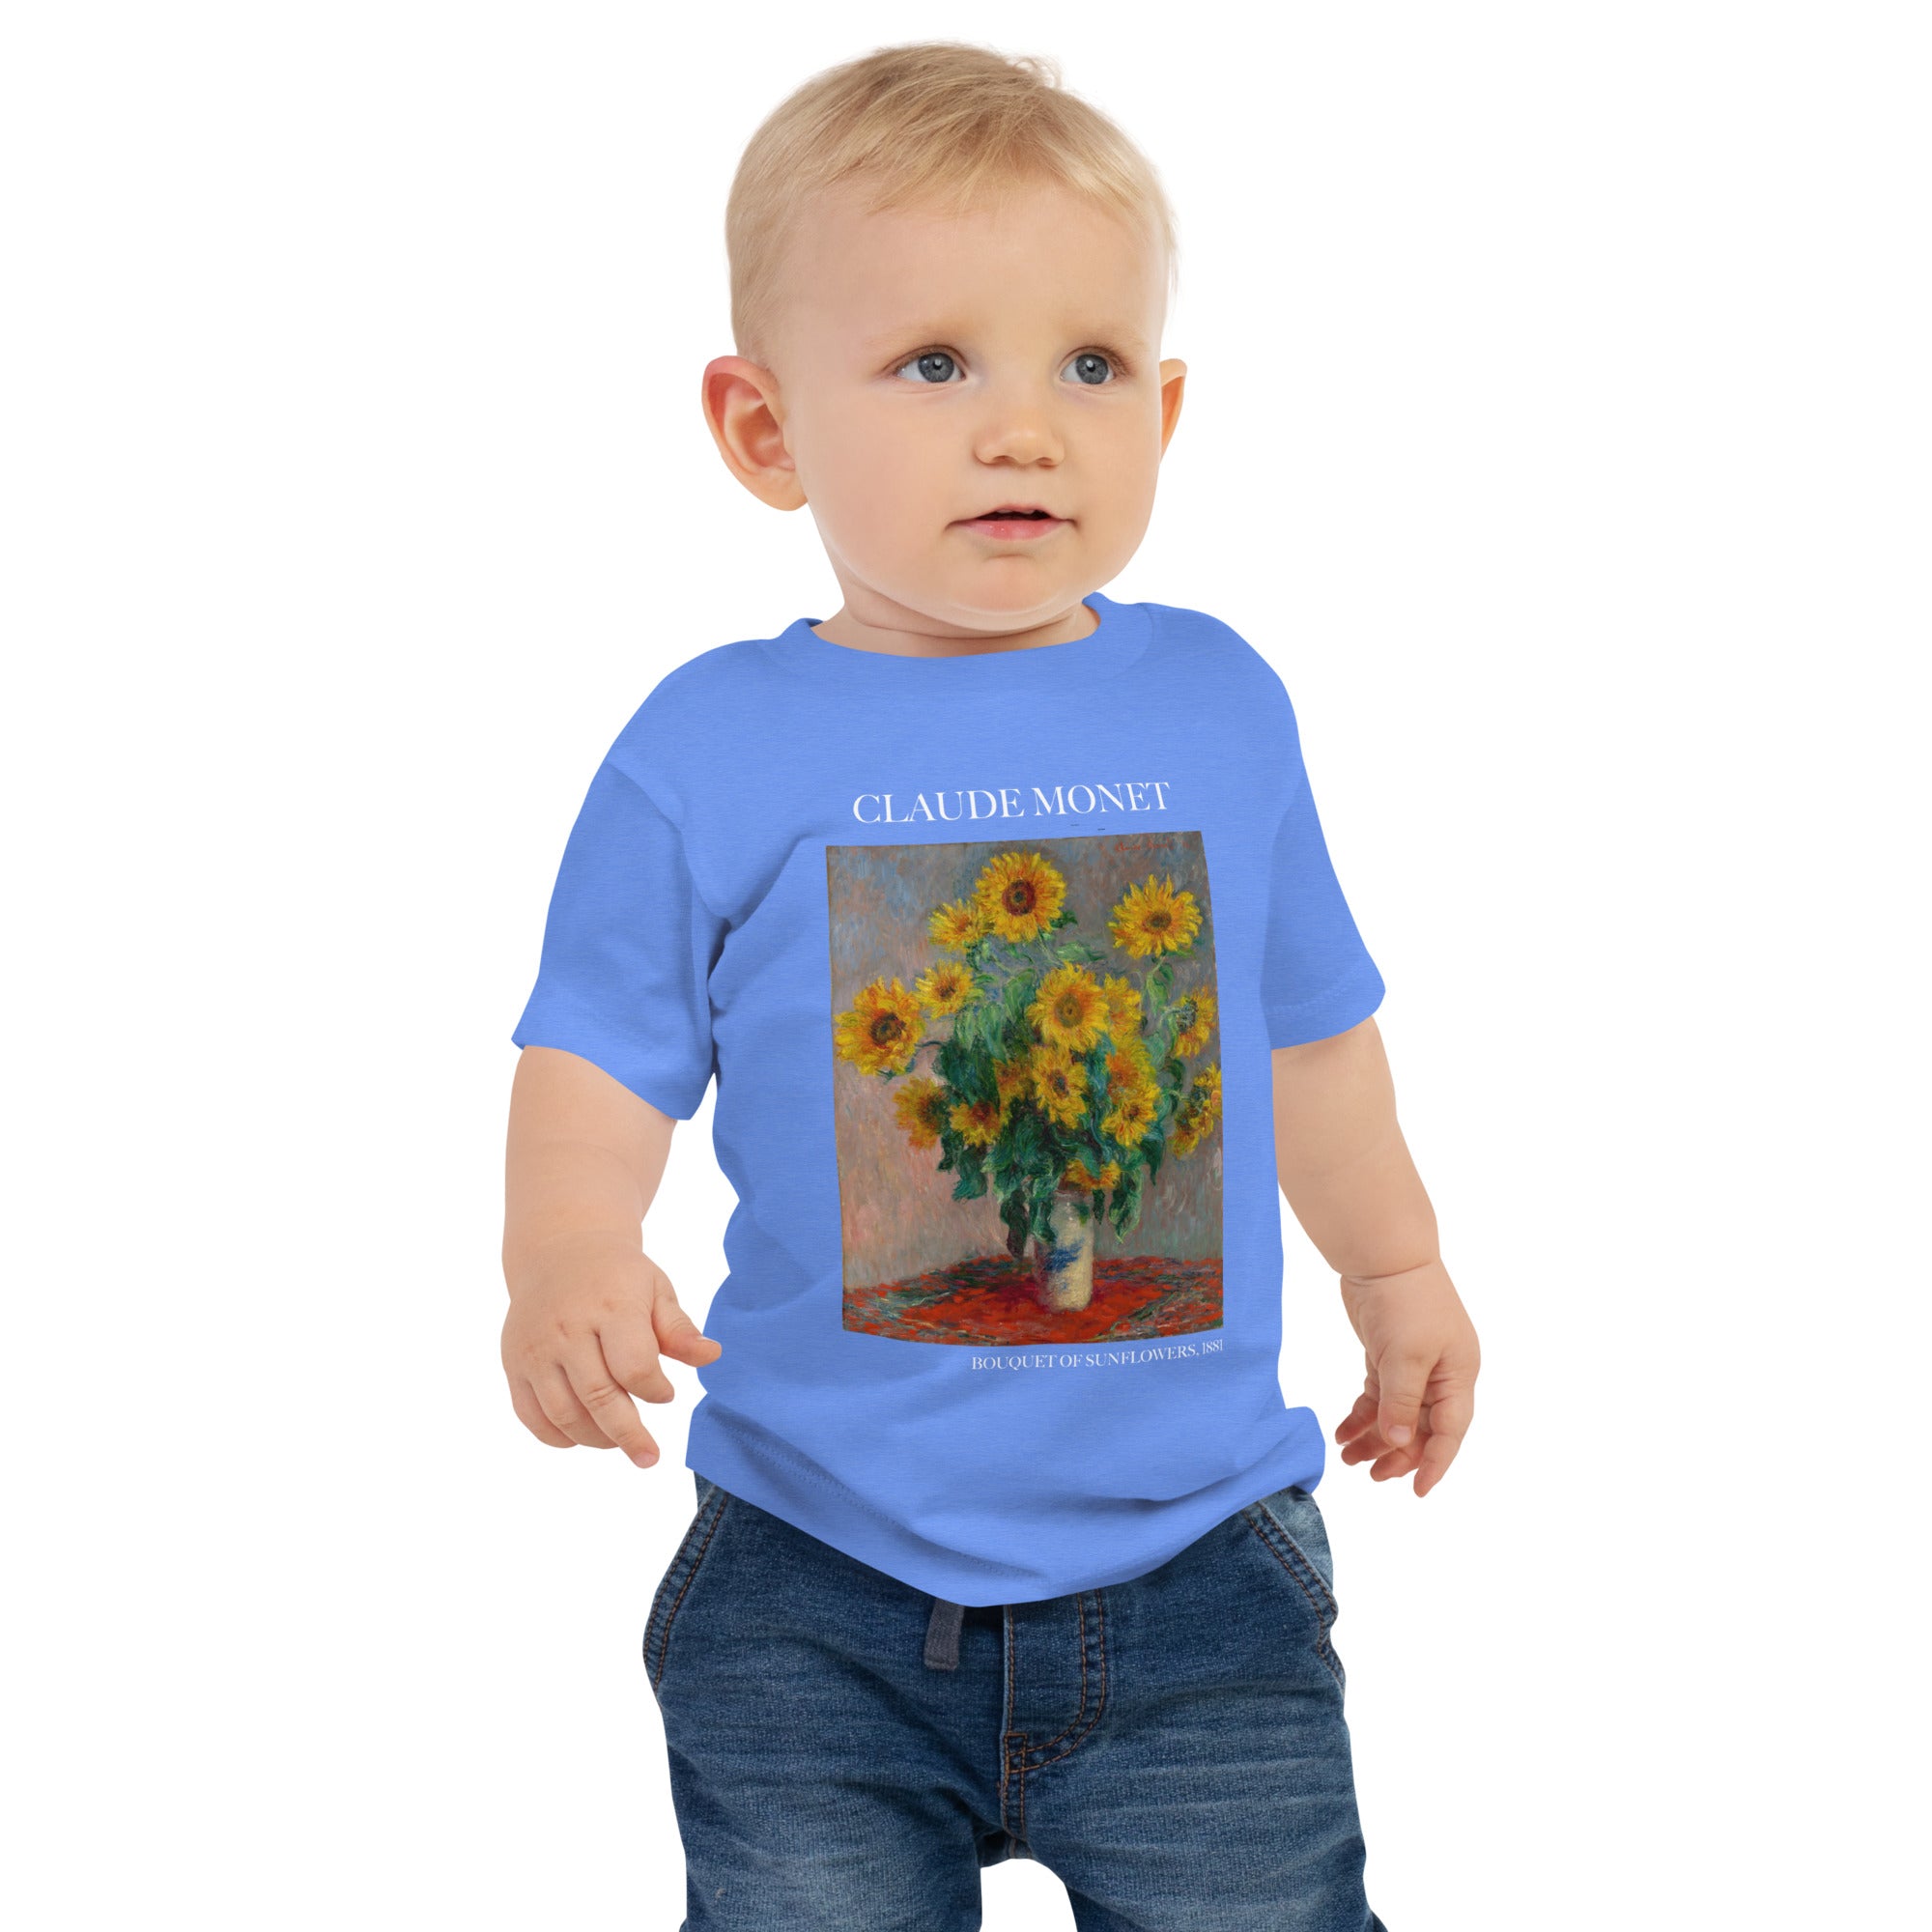 Claude Monet 'Bouquet of Sunflowers' Famous Painting Baby Staple T-Shirt | Premium Baby Art Tee